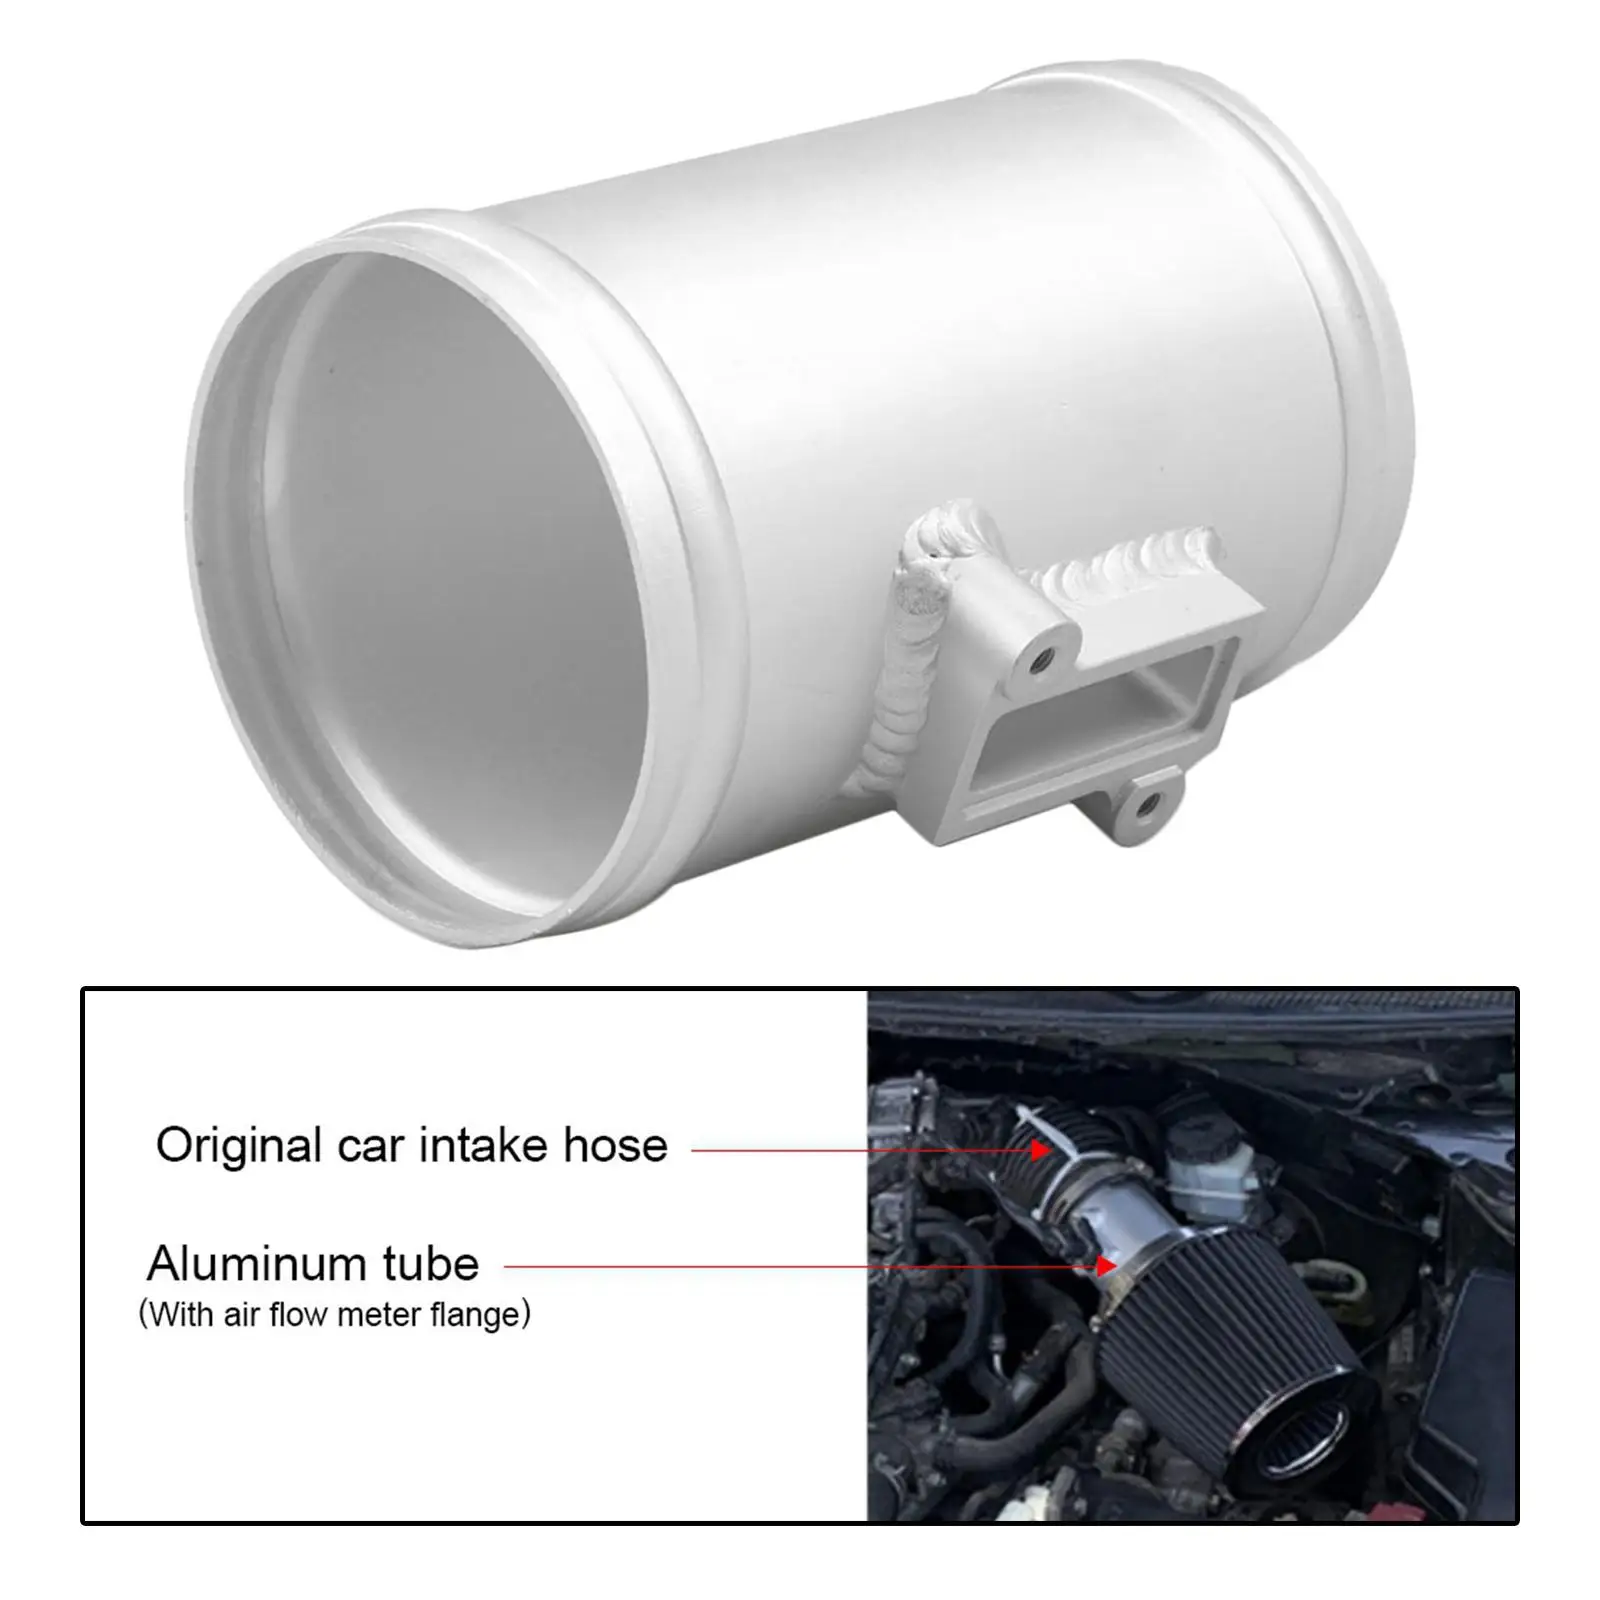 Maf air Flow Sensor Adapter Tube Replacement High Performance Aluminum Alloy